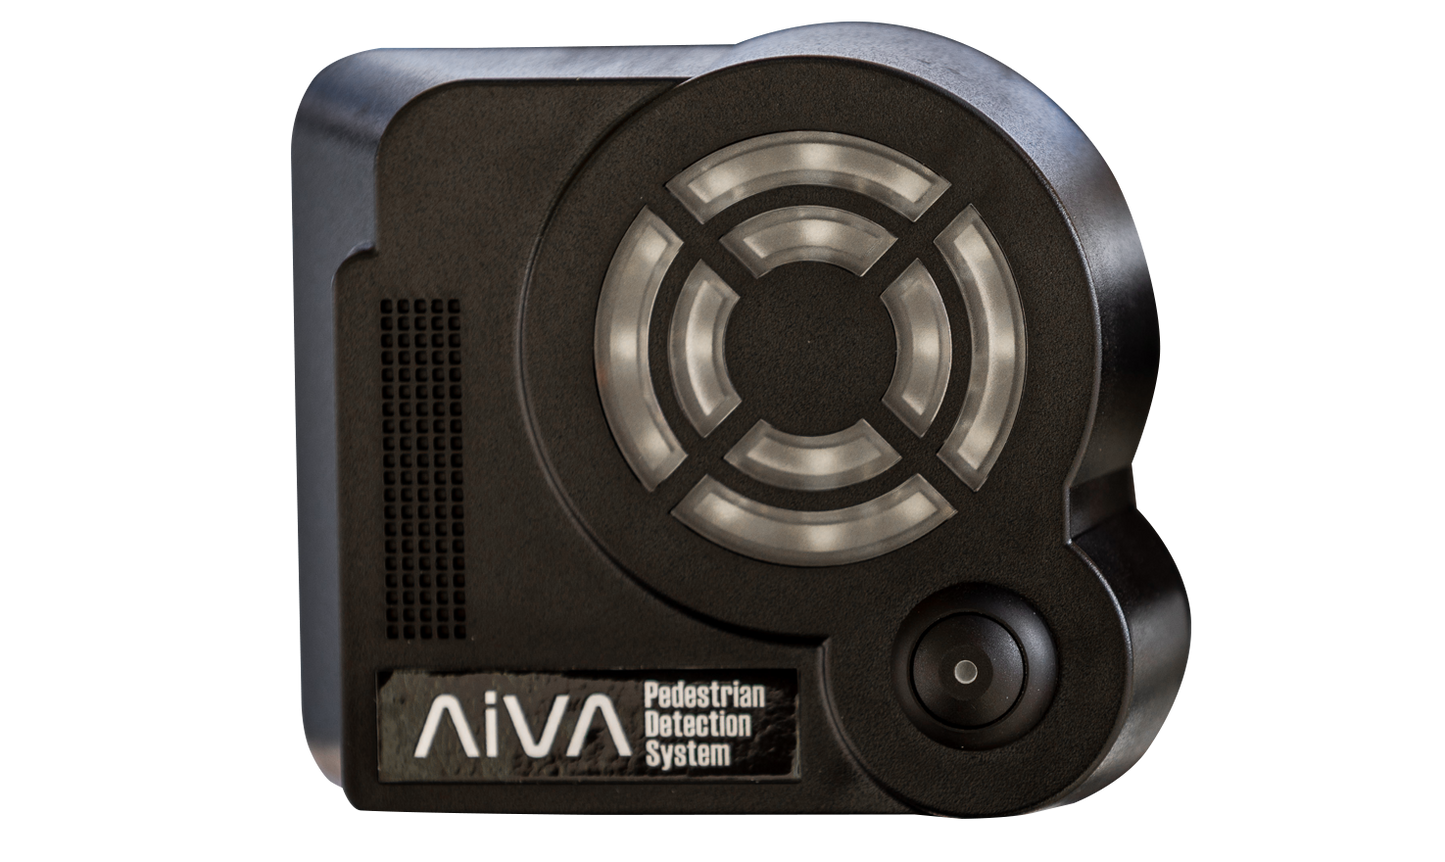 AiVA Pedestrian Detection System